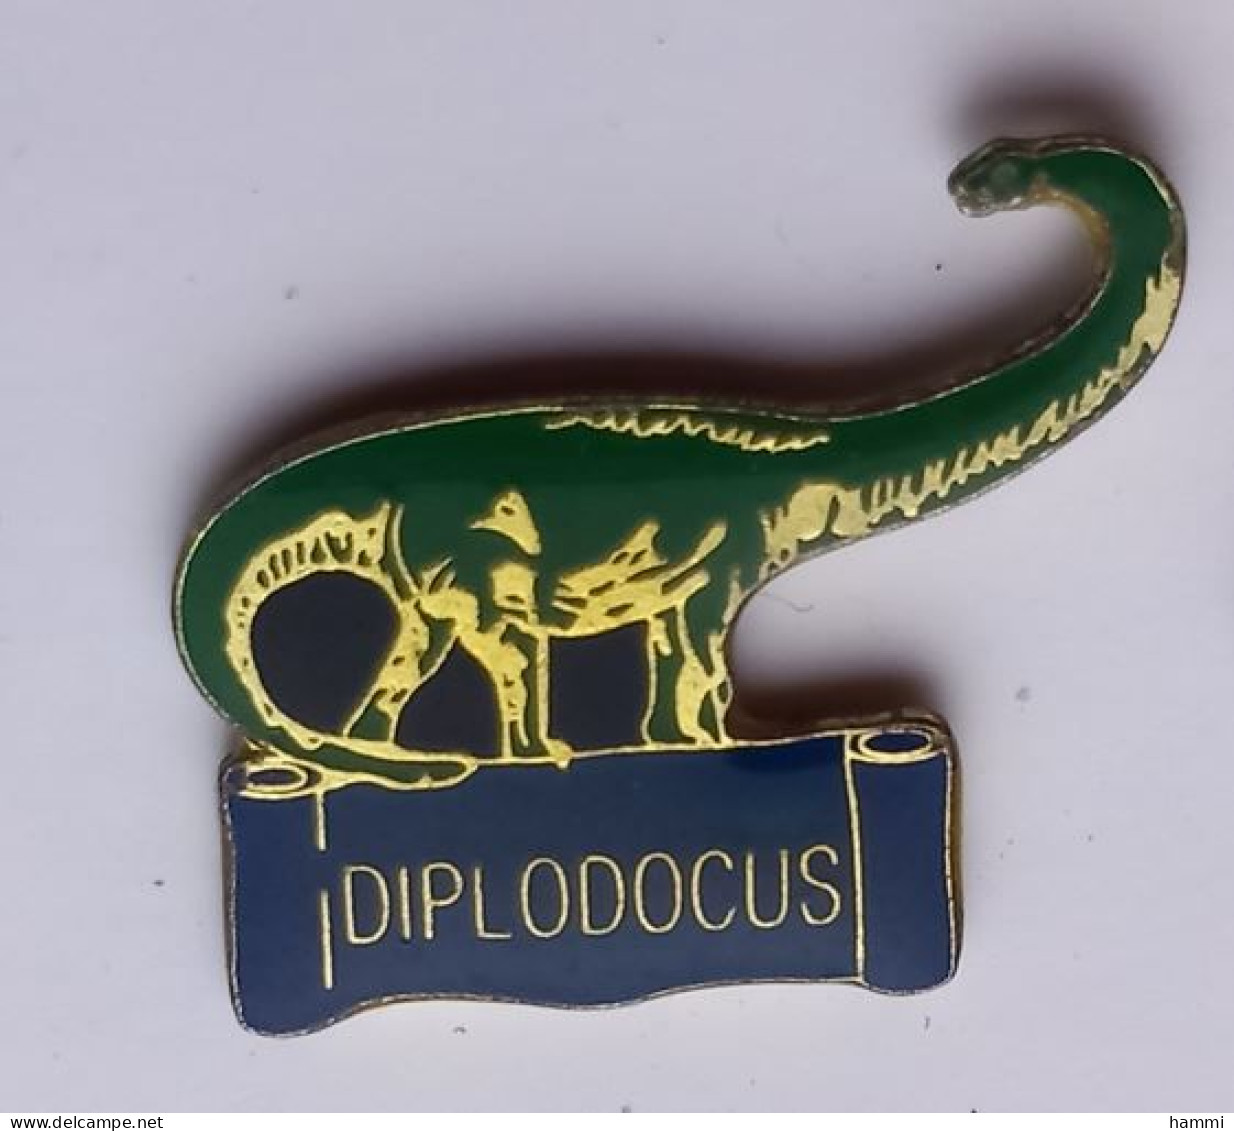 G278 Pin's Dinosaure Genre Diplodocus Achat Immédiat - Animals